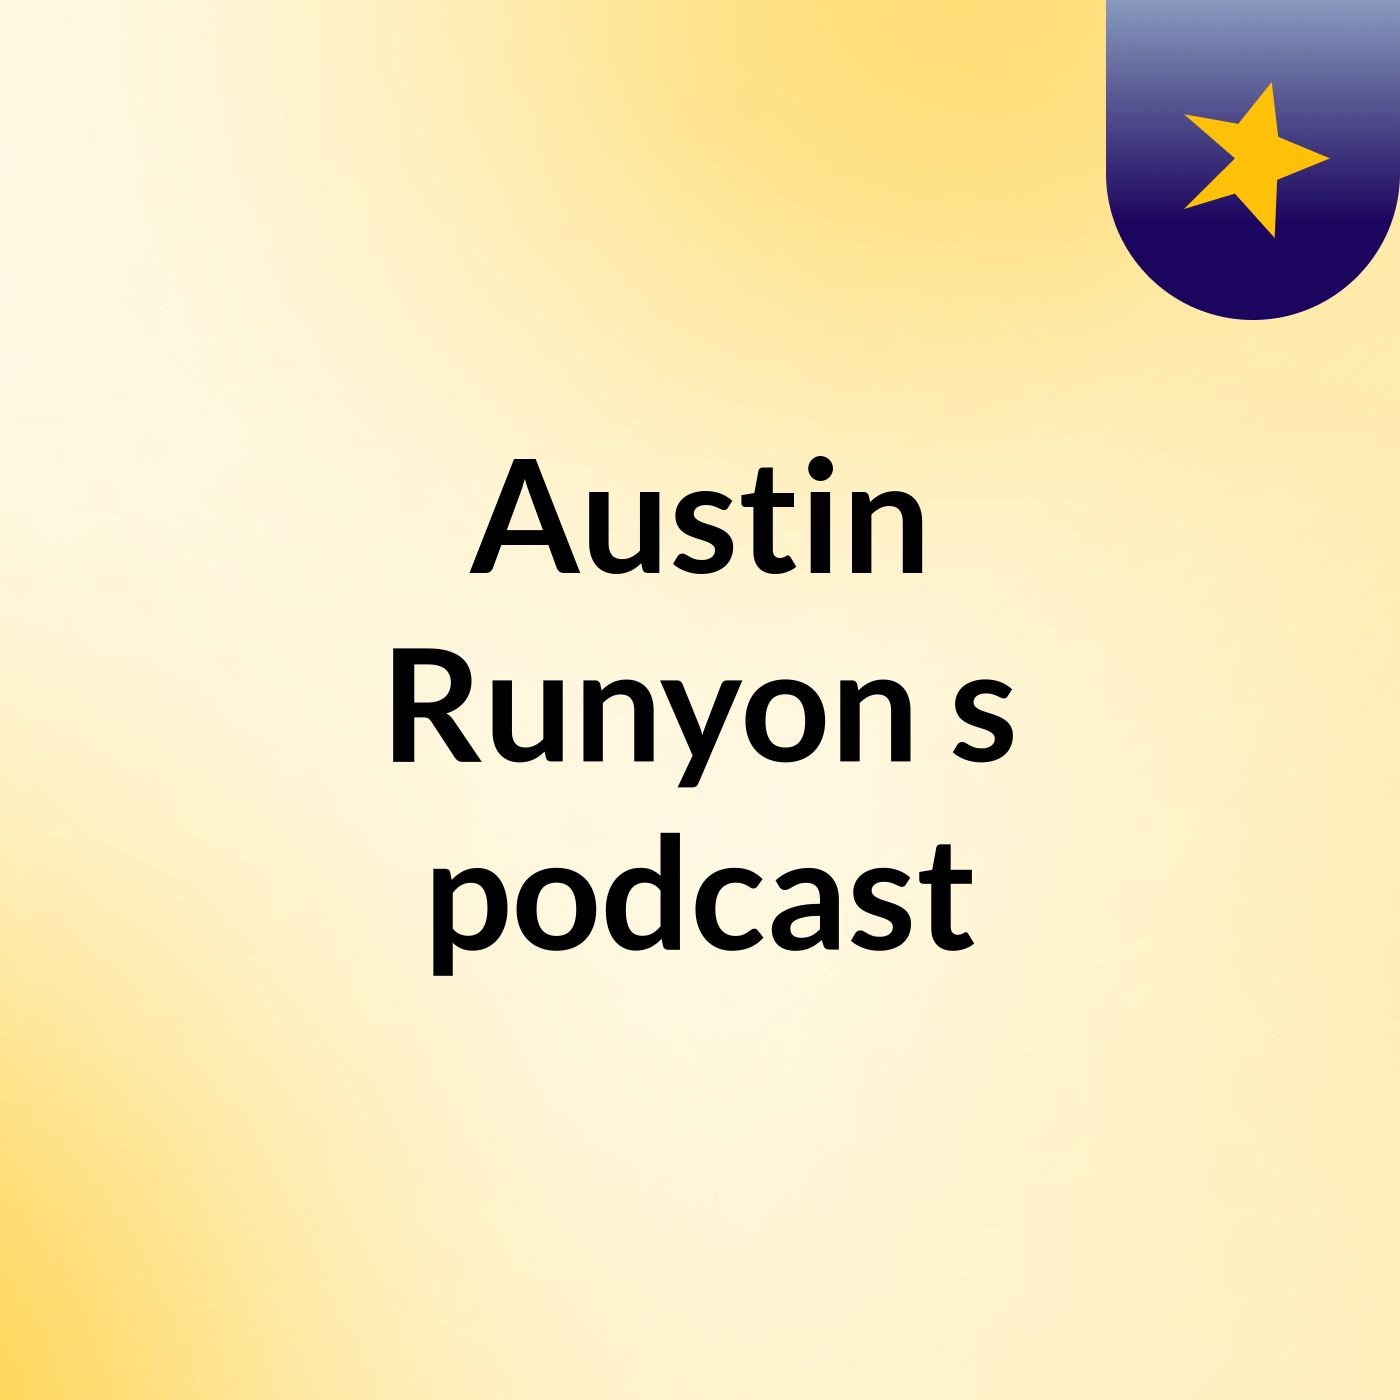 Austin Runyon's podcast